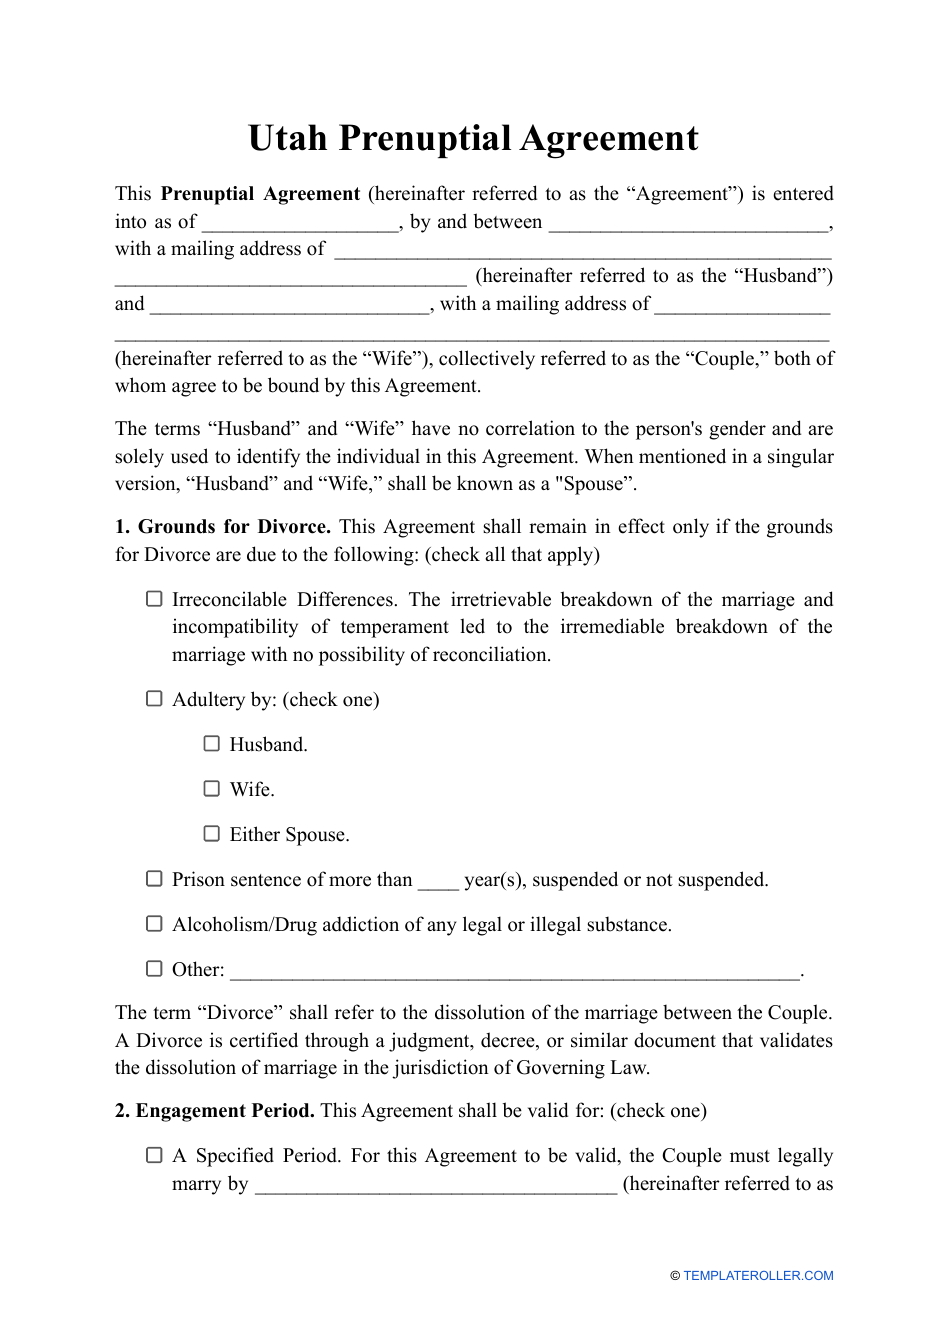 Prenuptial Agreement Template - Utah, Page 1